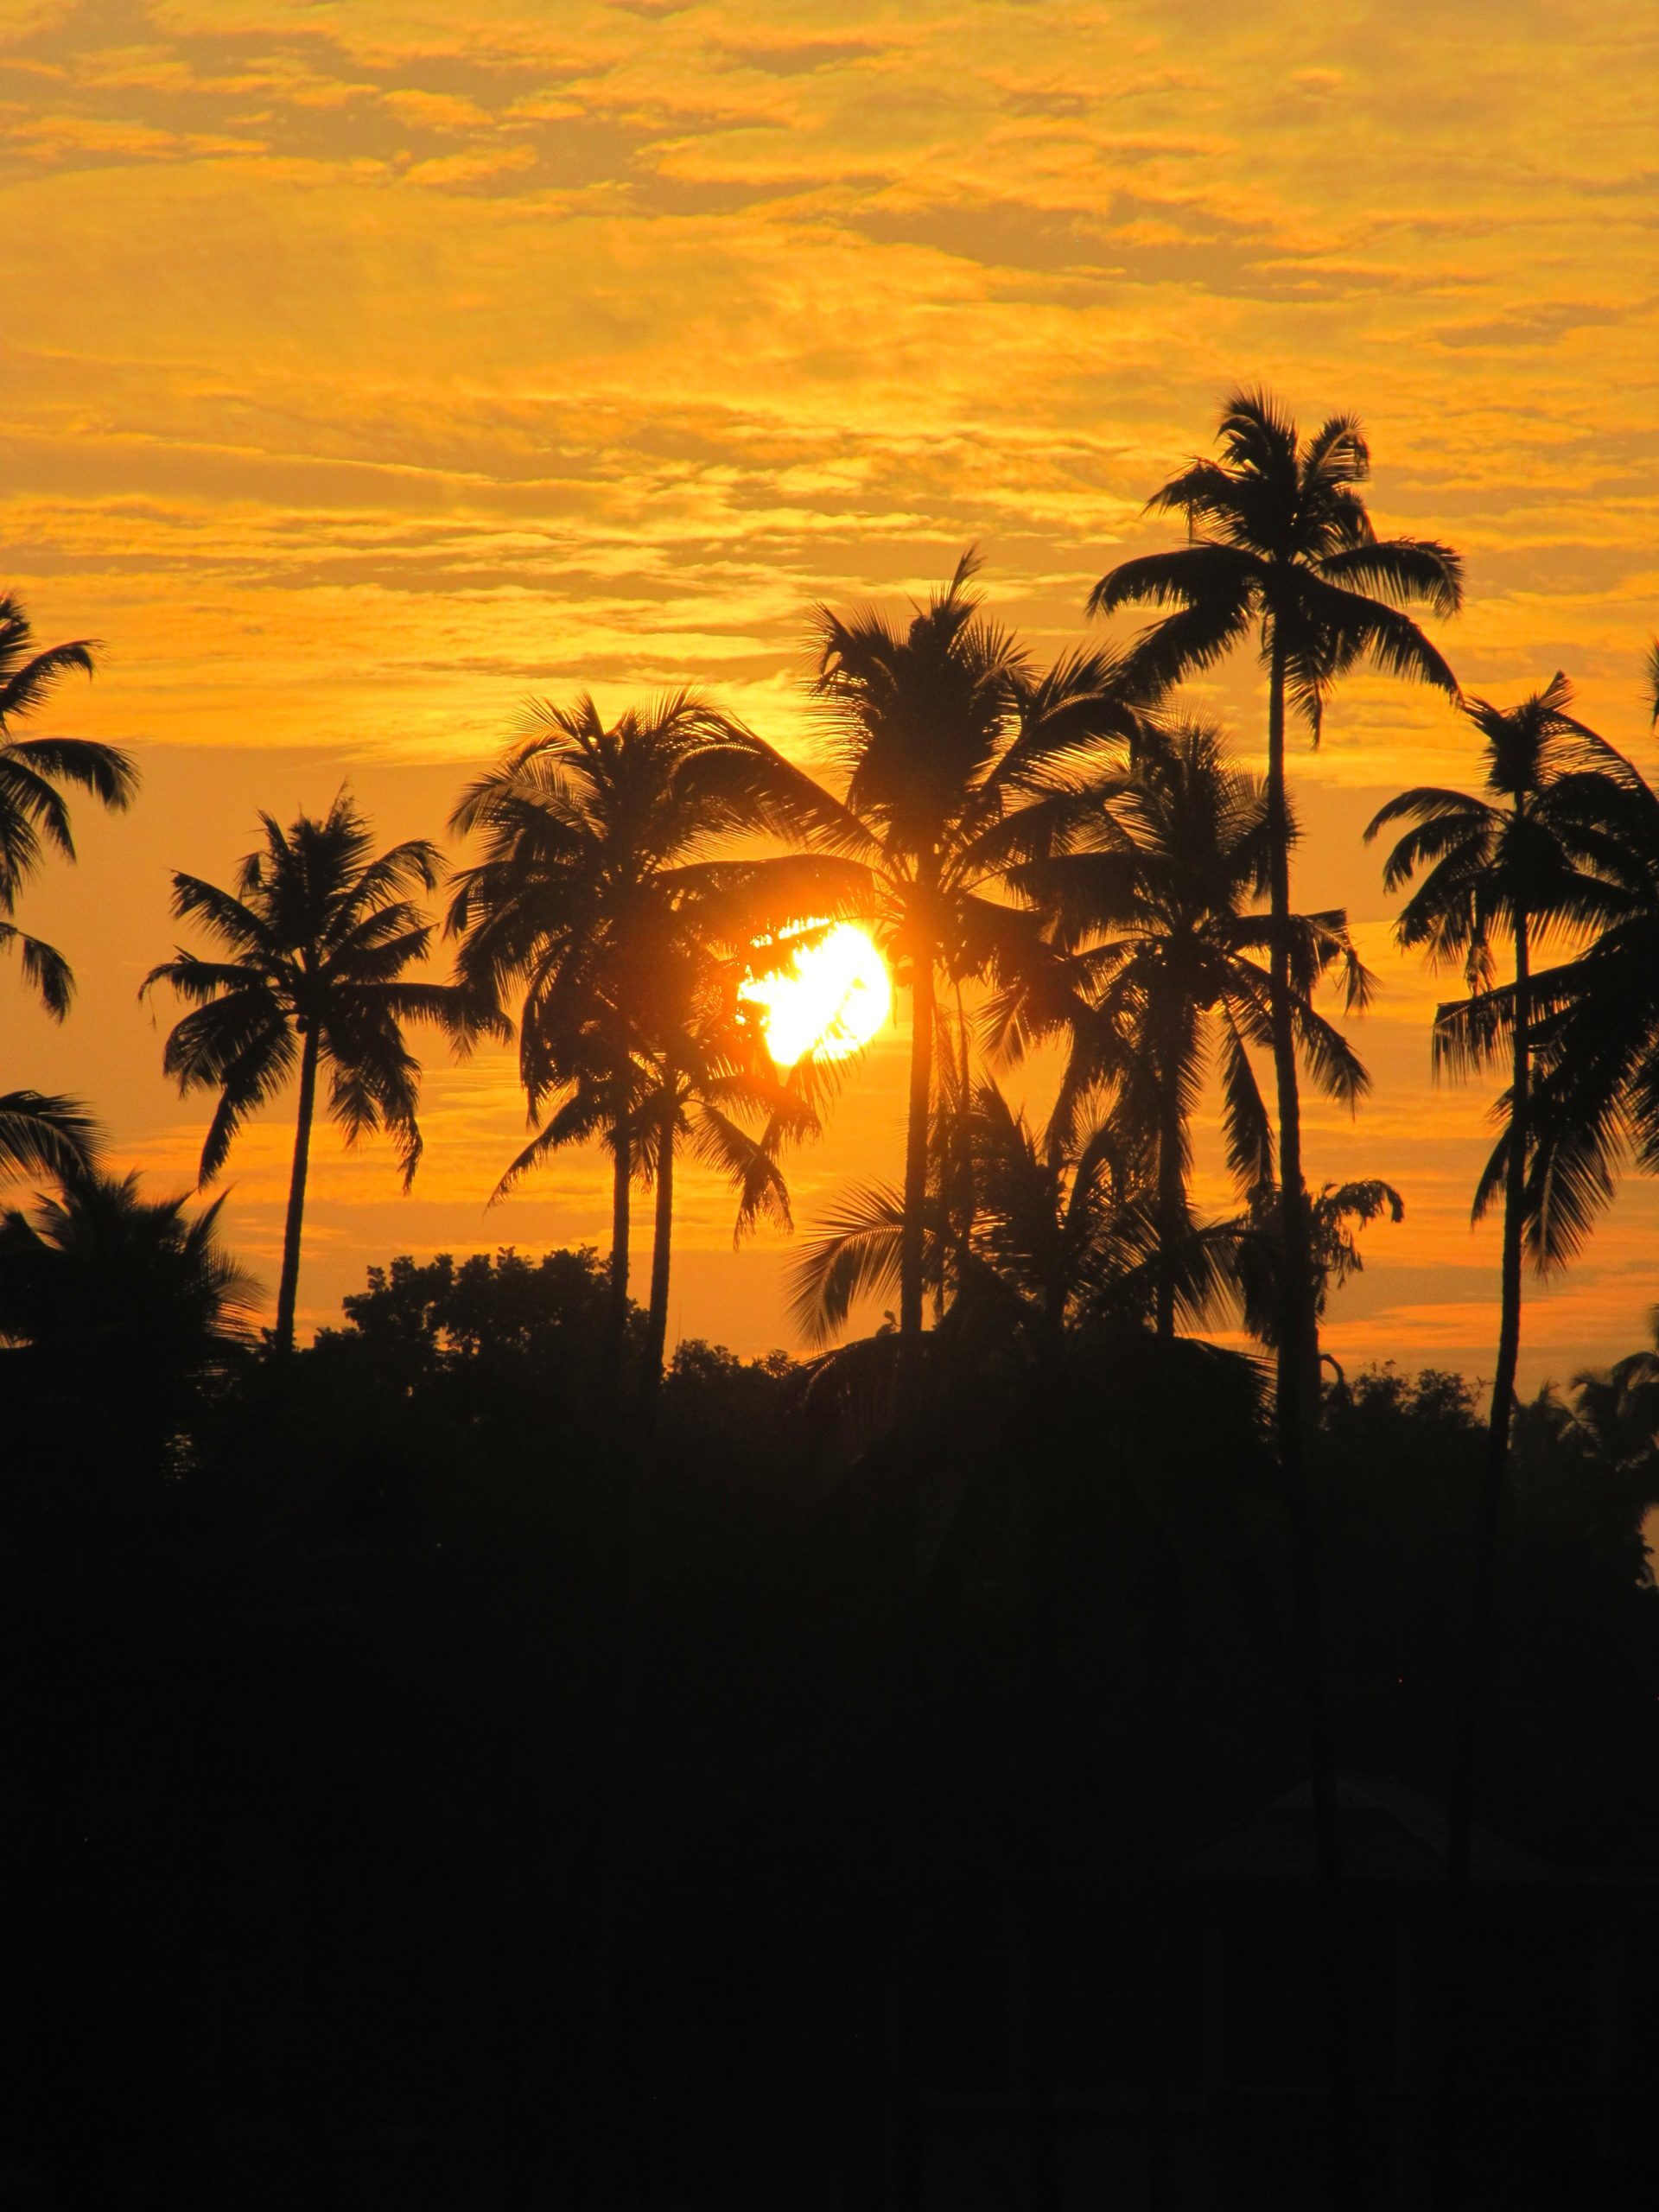 Sunset through palm trees